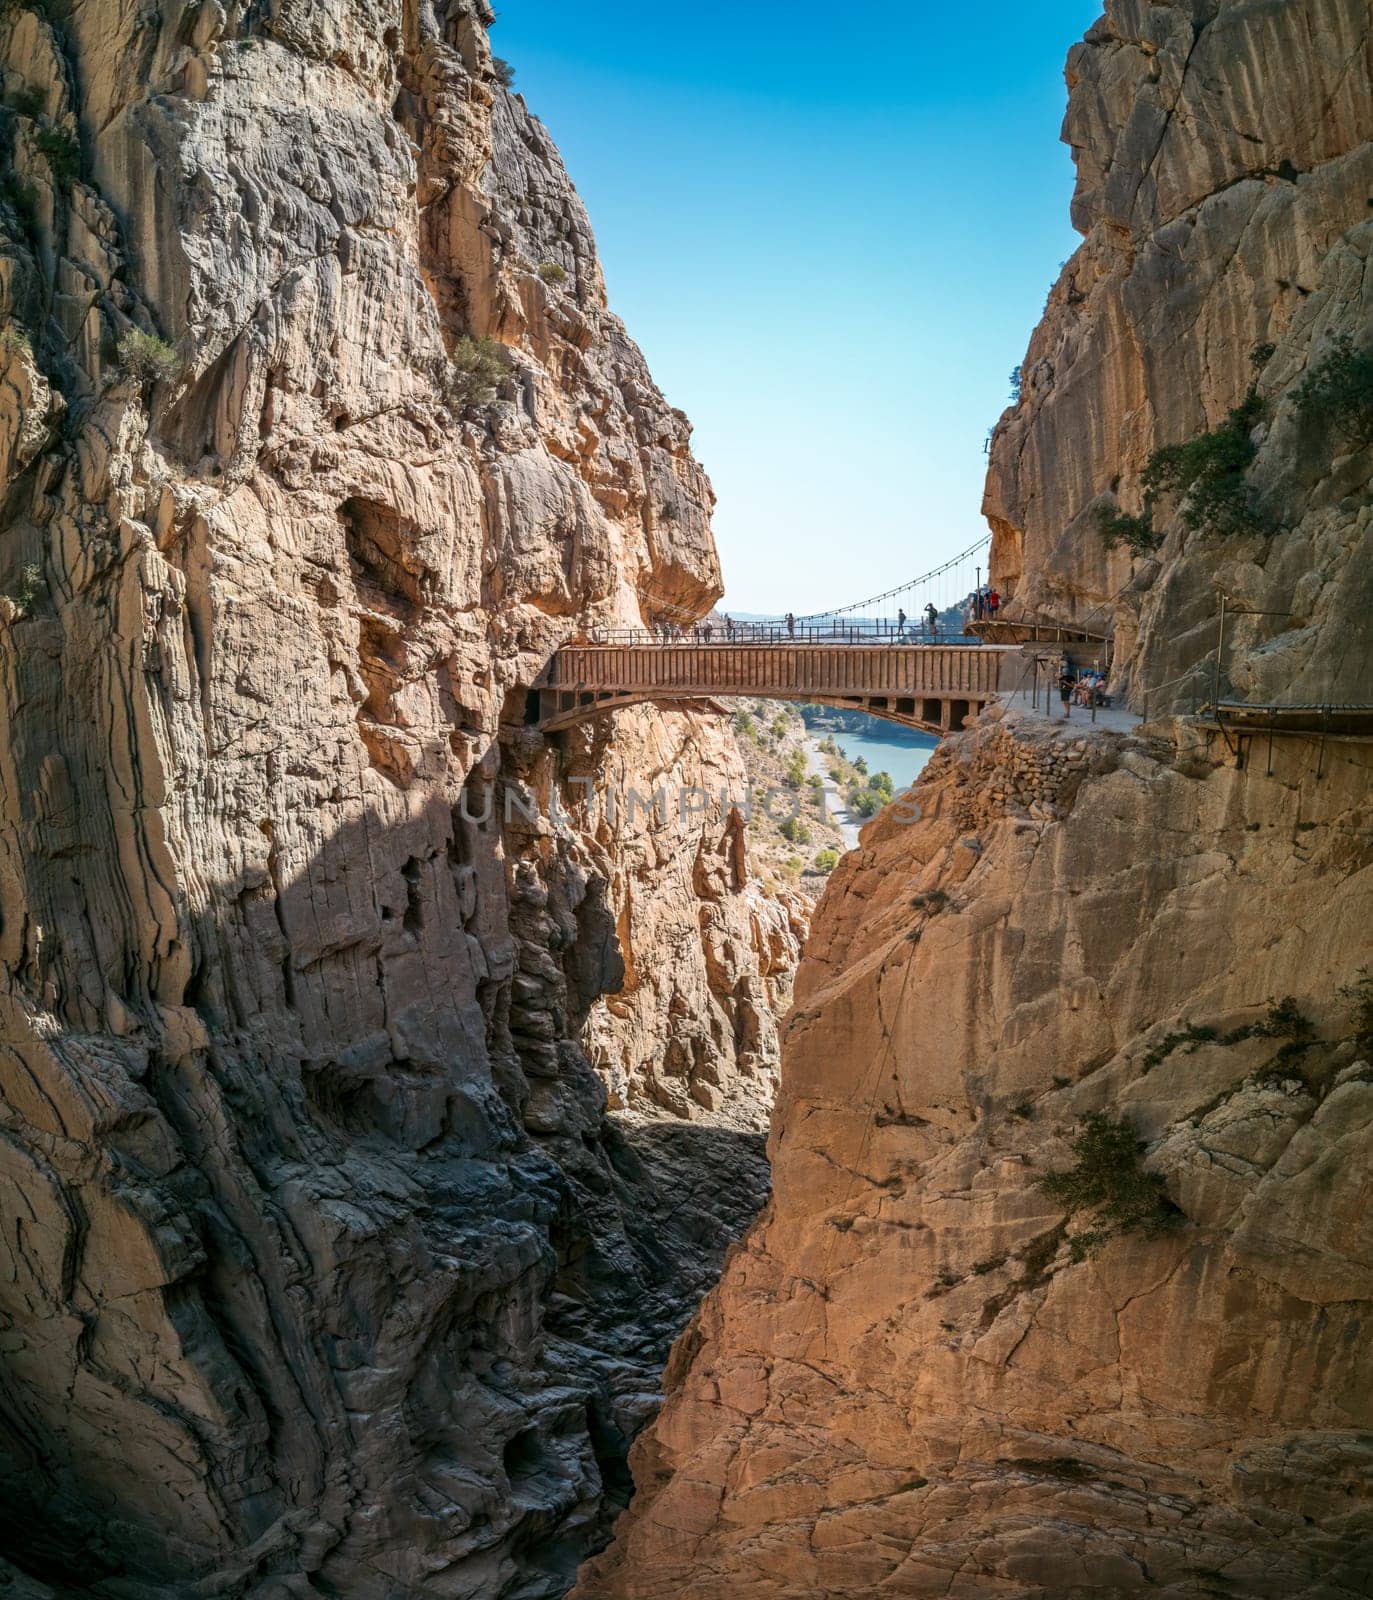 Breathtaking Cliffside Pathway of Caminito Del Rey, Malaga, Spain by FerradalFCG